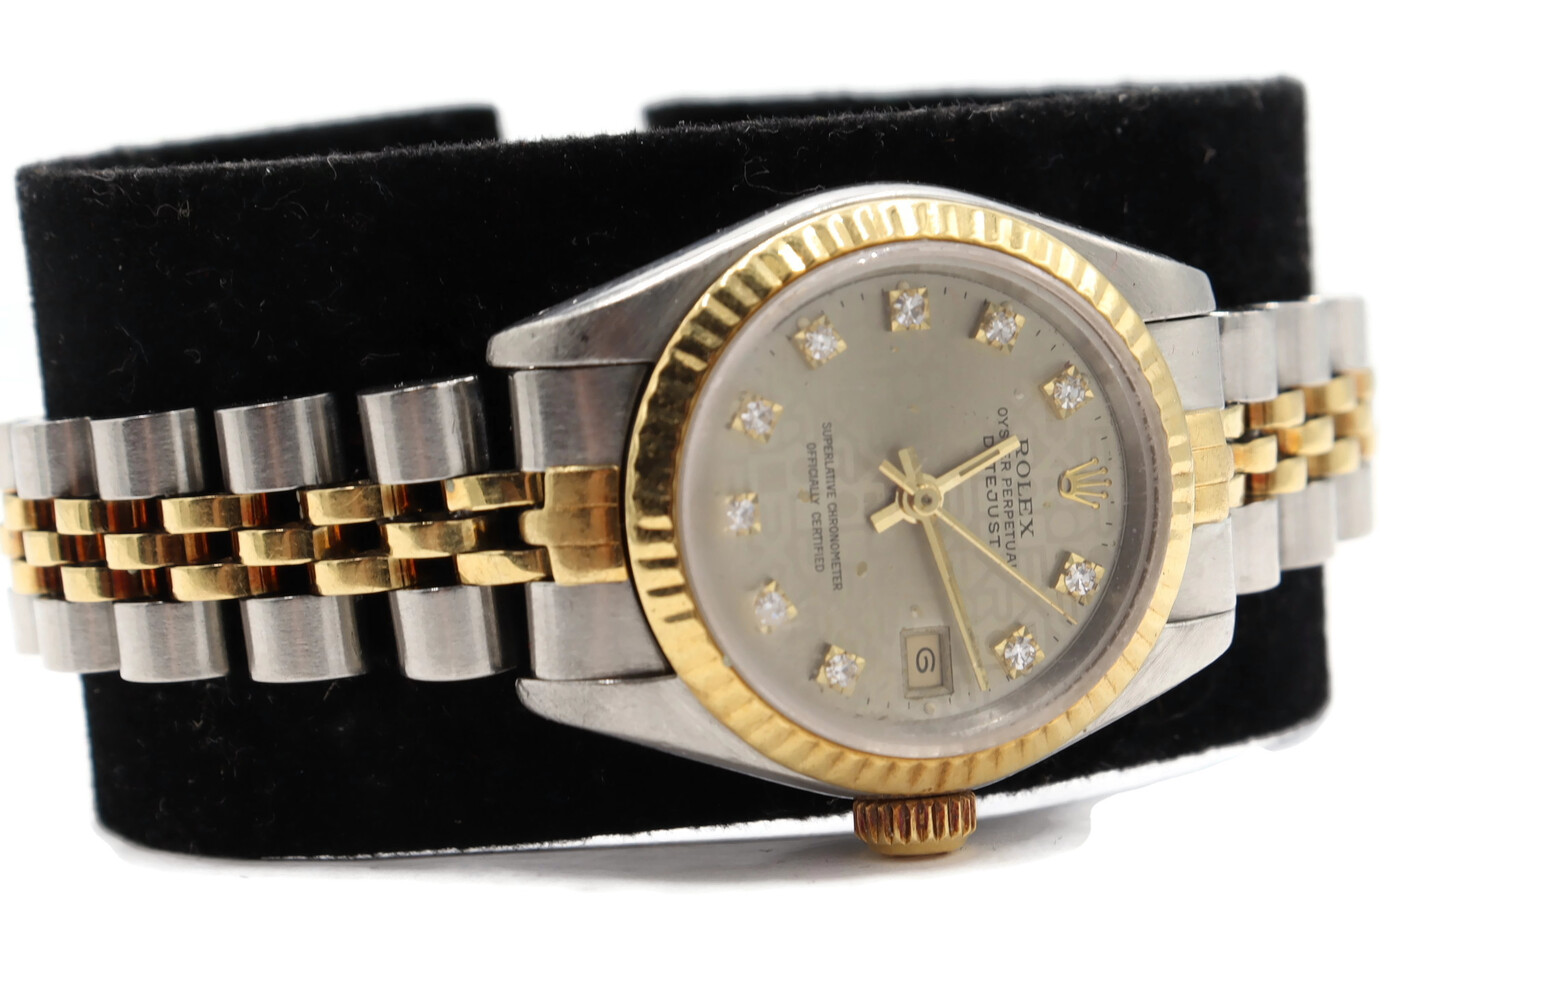 Authentic Rolex Lades 2 Tone Date Women's Wrist Watch 